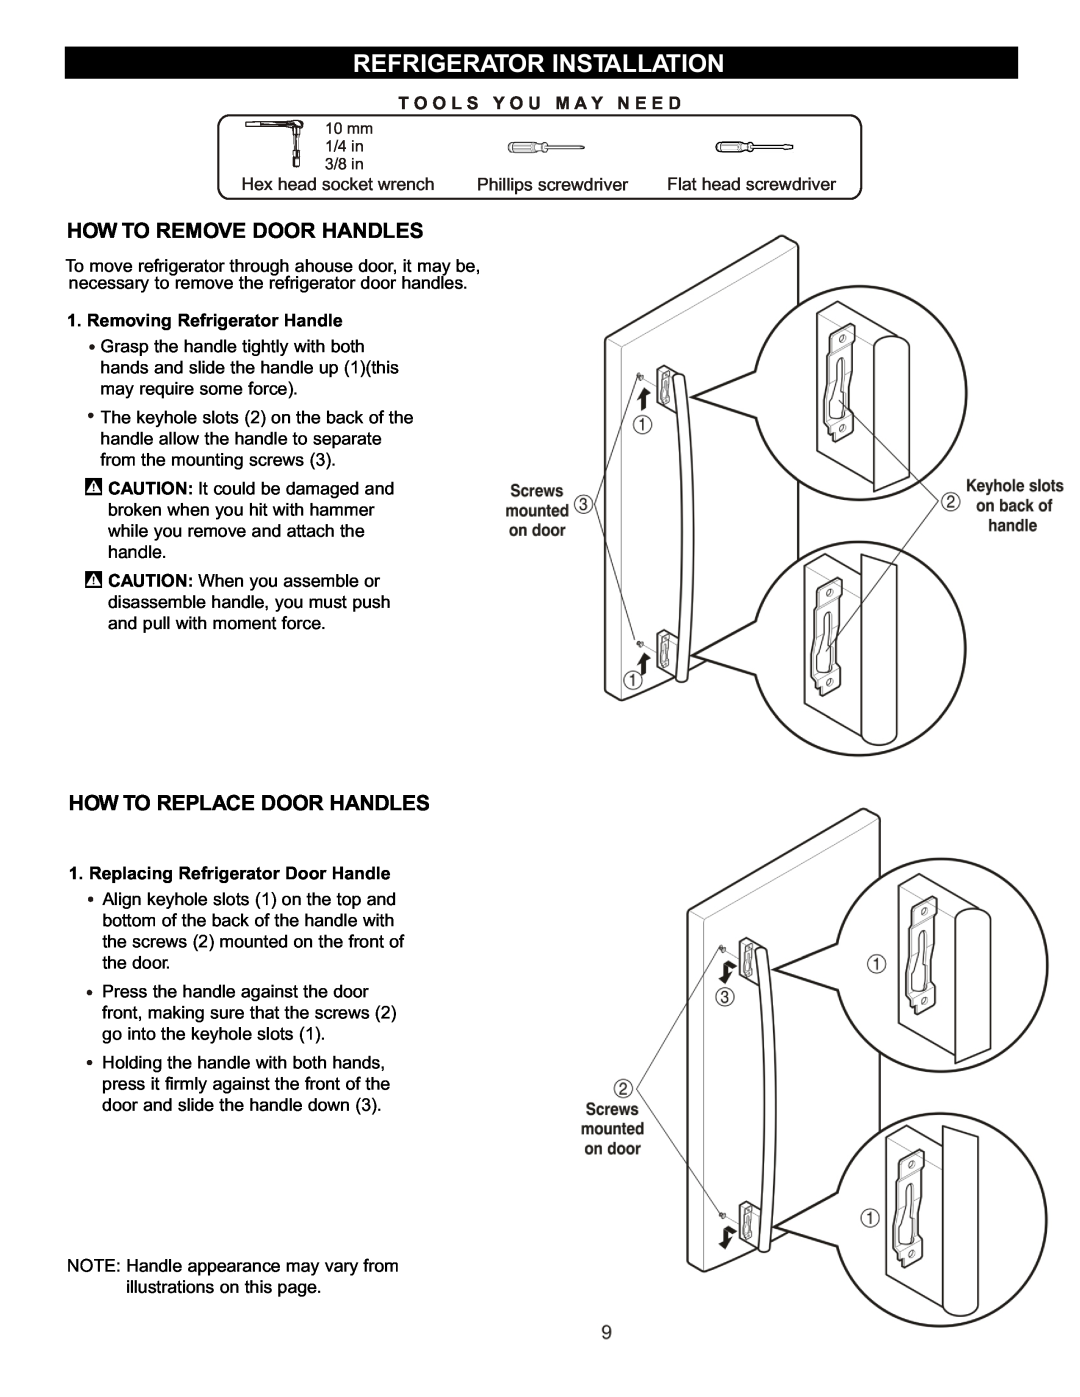 LG Electronics LFC20740, LFC22740 How To Remove Door Handles, How To Replace Door Handles, T O O L S Y O U M A Y N E E D 